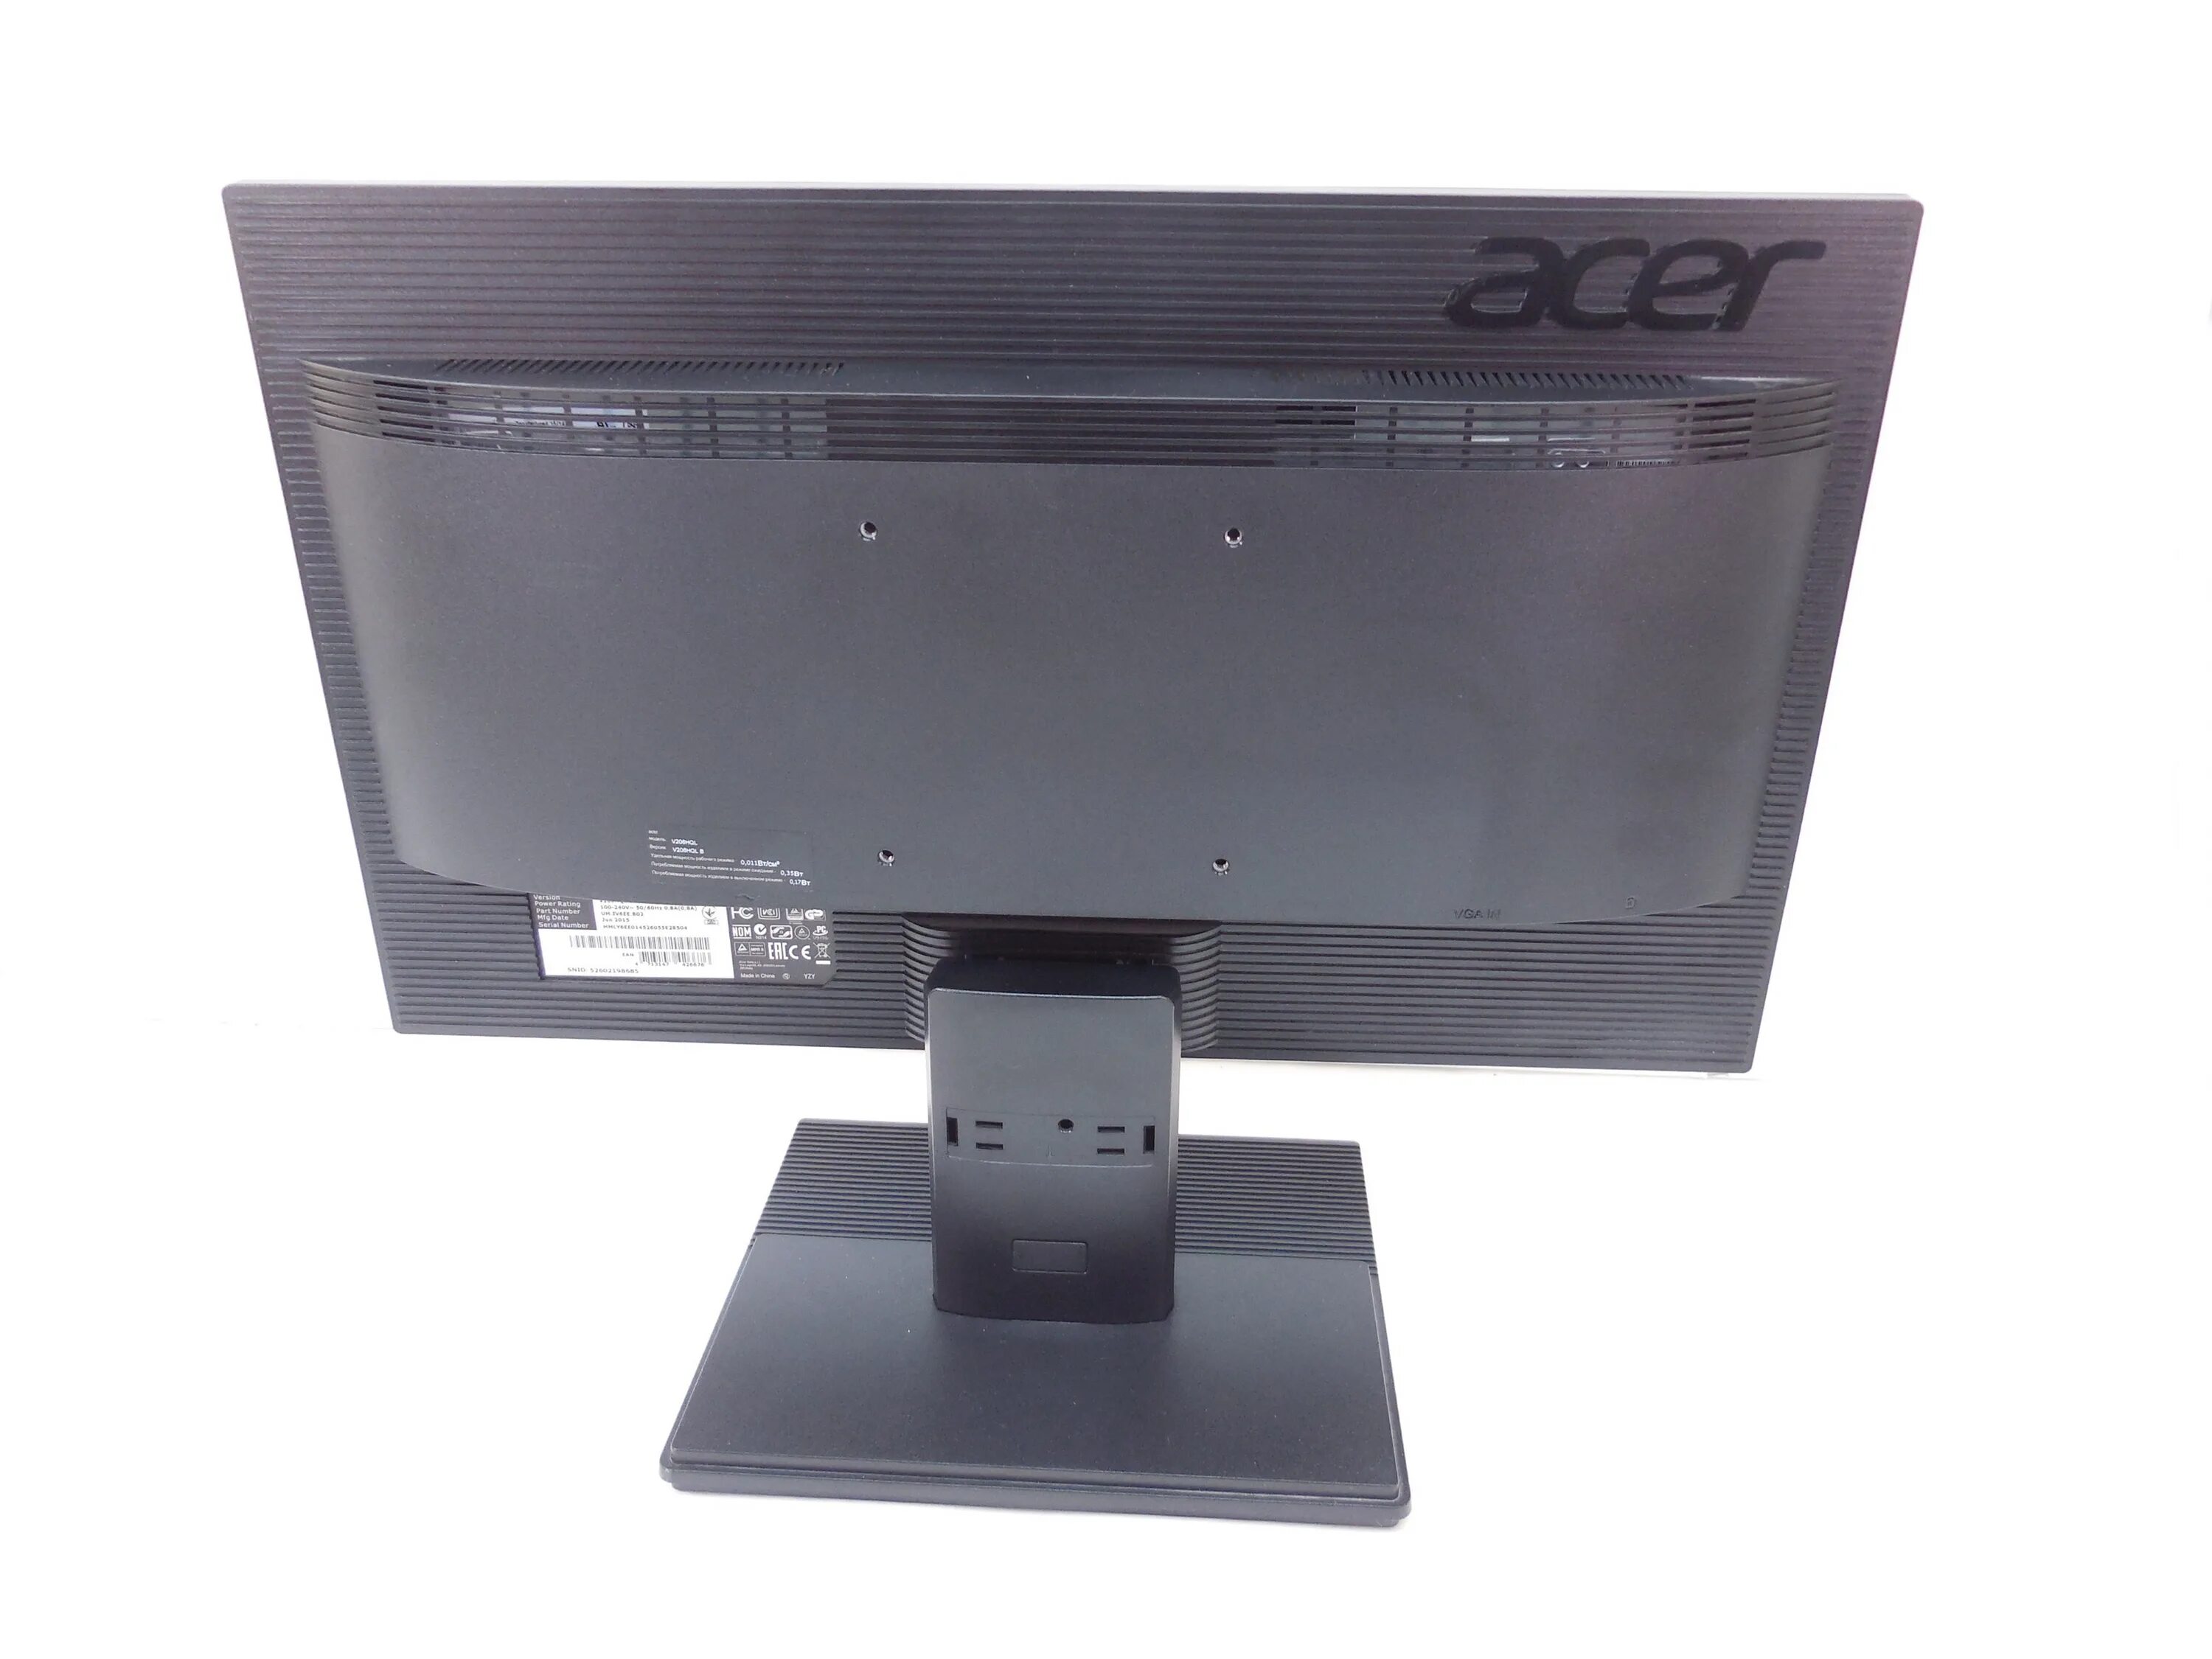 Acm в мониторе. Acer 206hql. Acer226hql b bd. 19.5" Монитор Acer v206hqlab. Монитор Hyundai v206w.